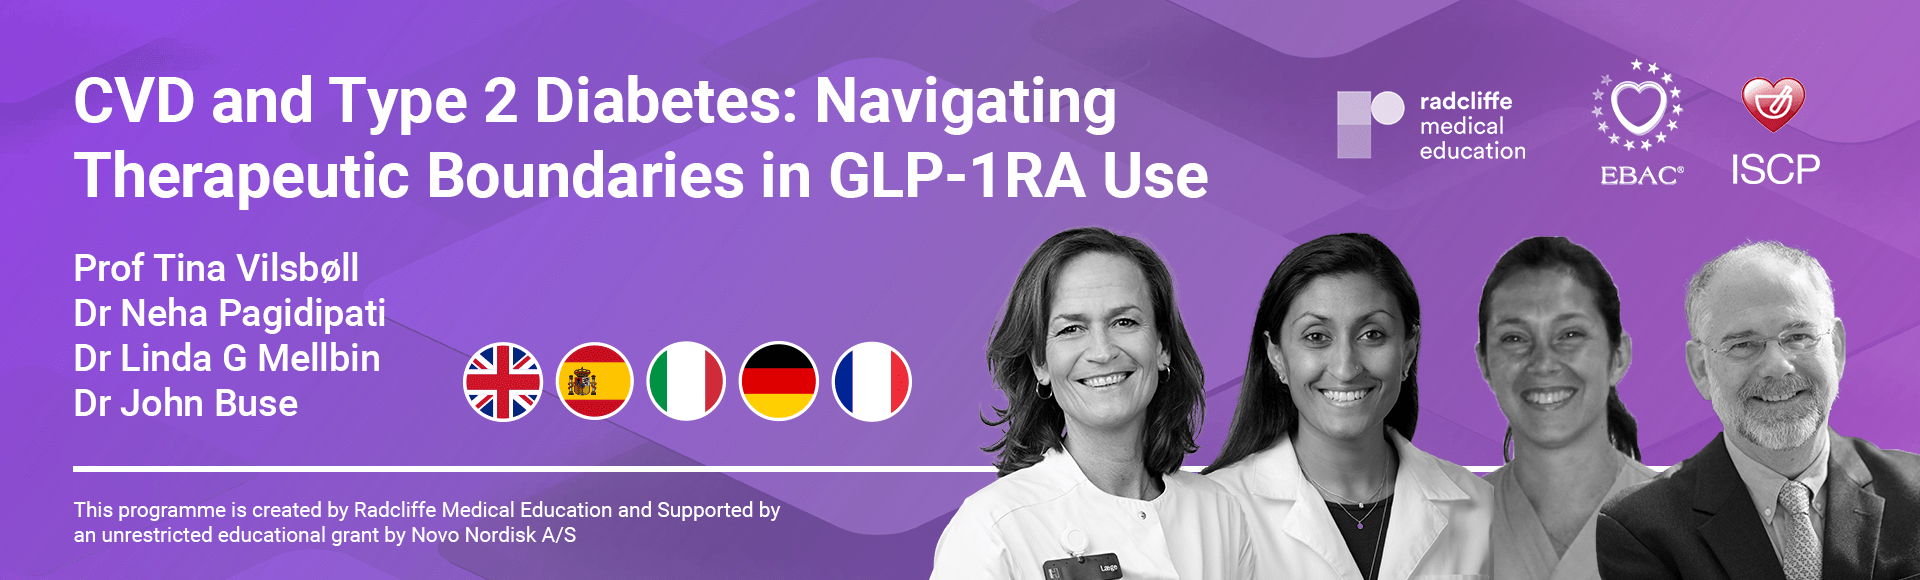 CVD and Type 2 Diabetes: Navigating Therapeutic Boundaries in GLP-1 RA Use